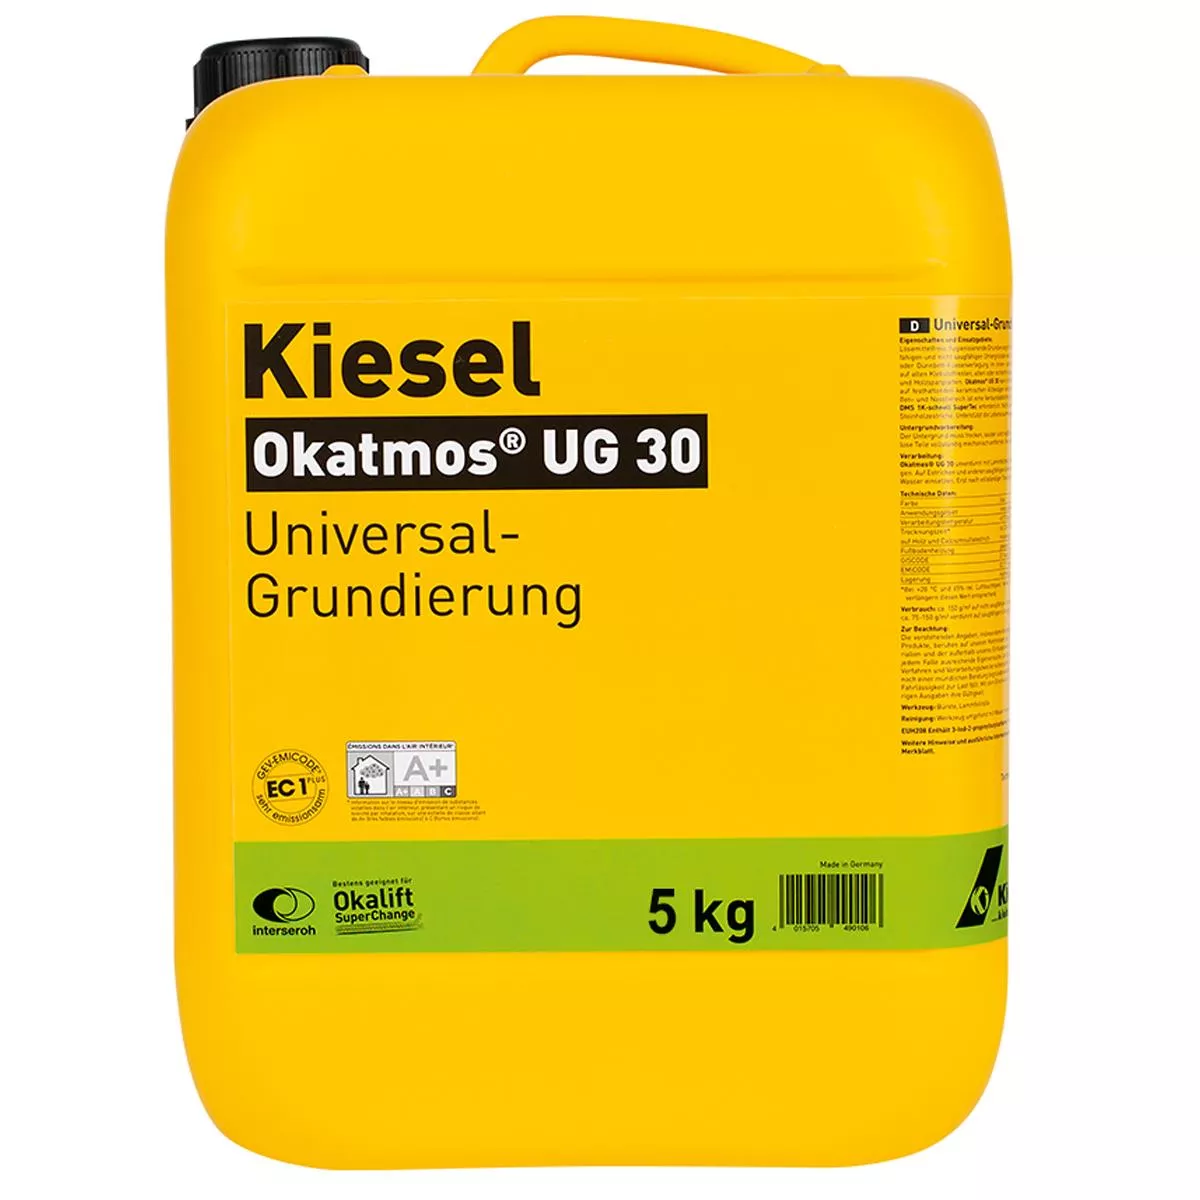 Universal primer Kiesel Okatmos UG 30 Blue 5 kg